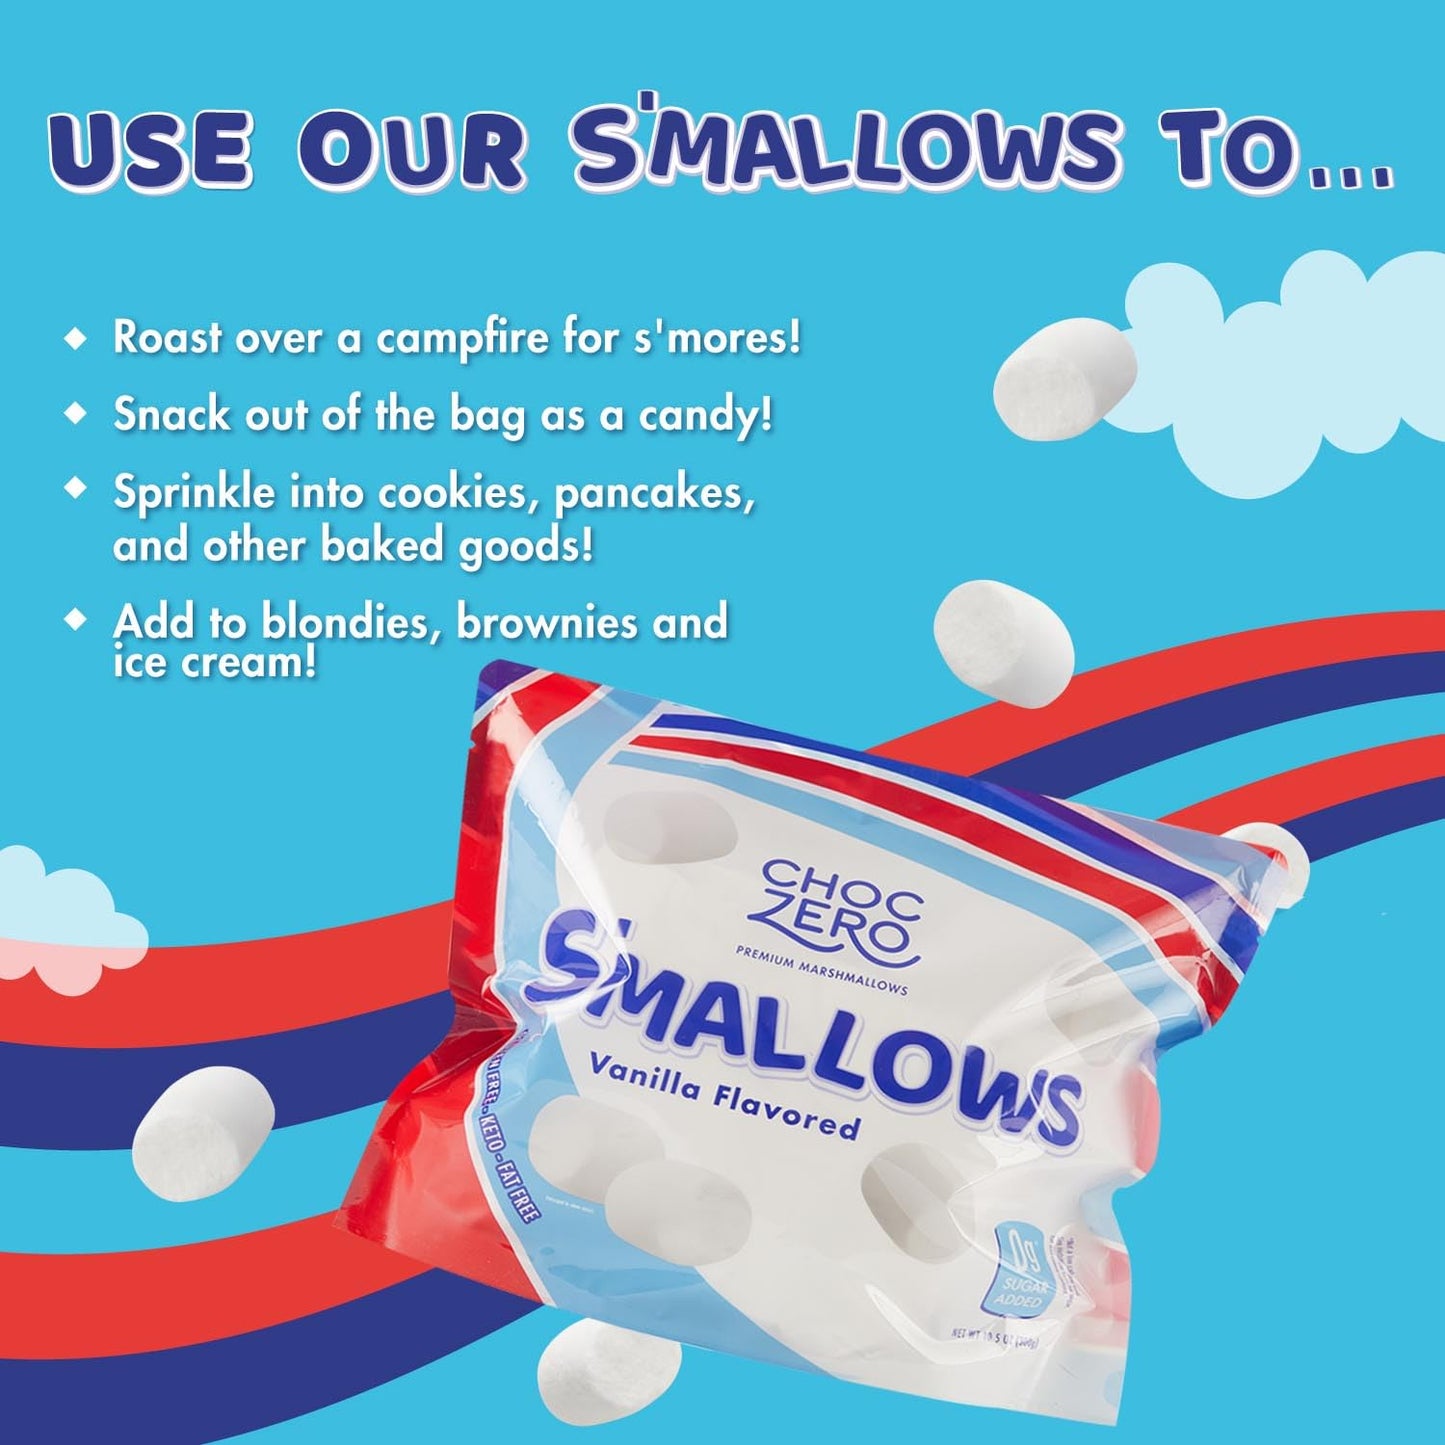 ChocZero Sugar Free Marshmallows - Keto Marshmallow - Gluten Free, 0g Fat, Zero Sugars - Healthy Low Carb - 10.5 Ounce Bag